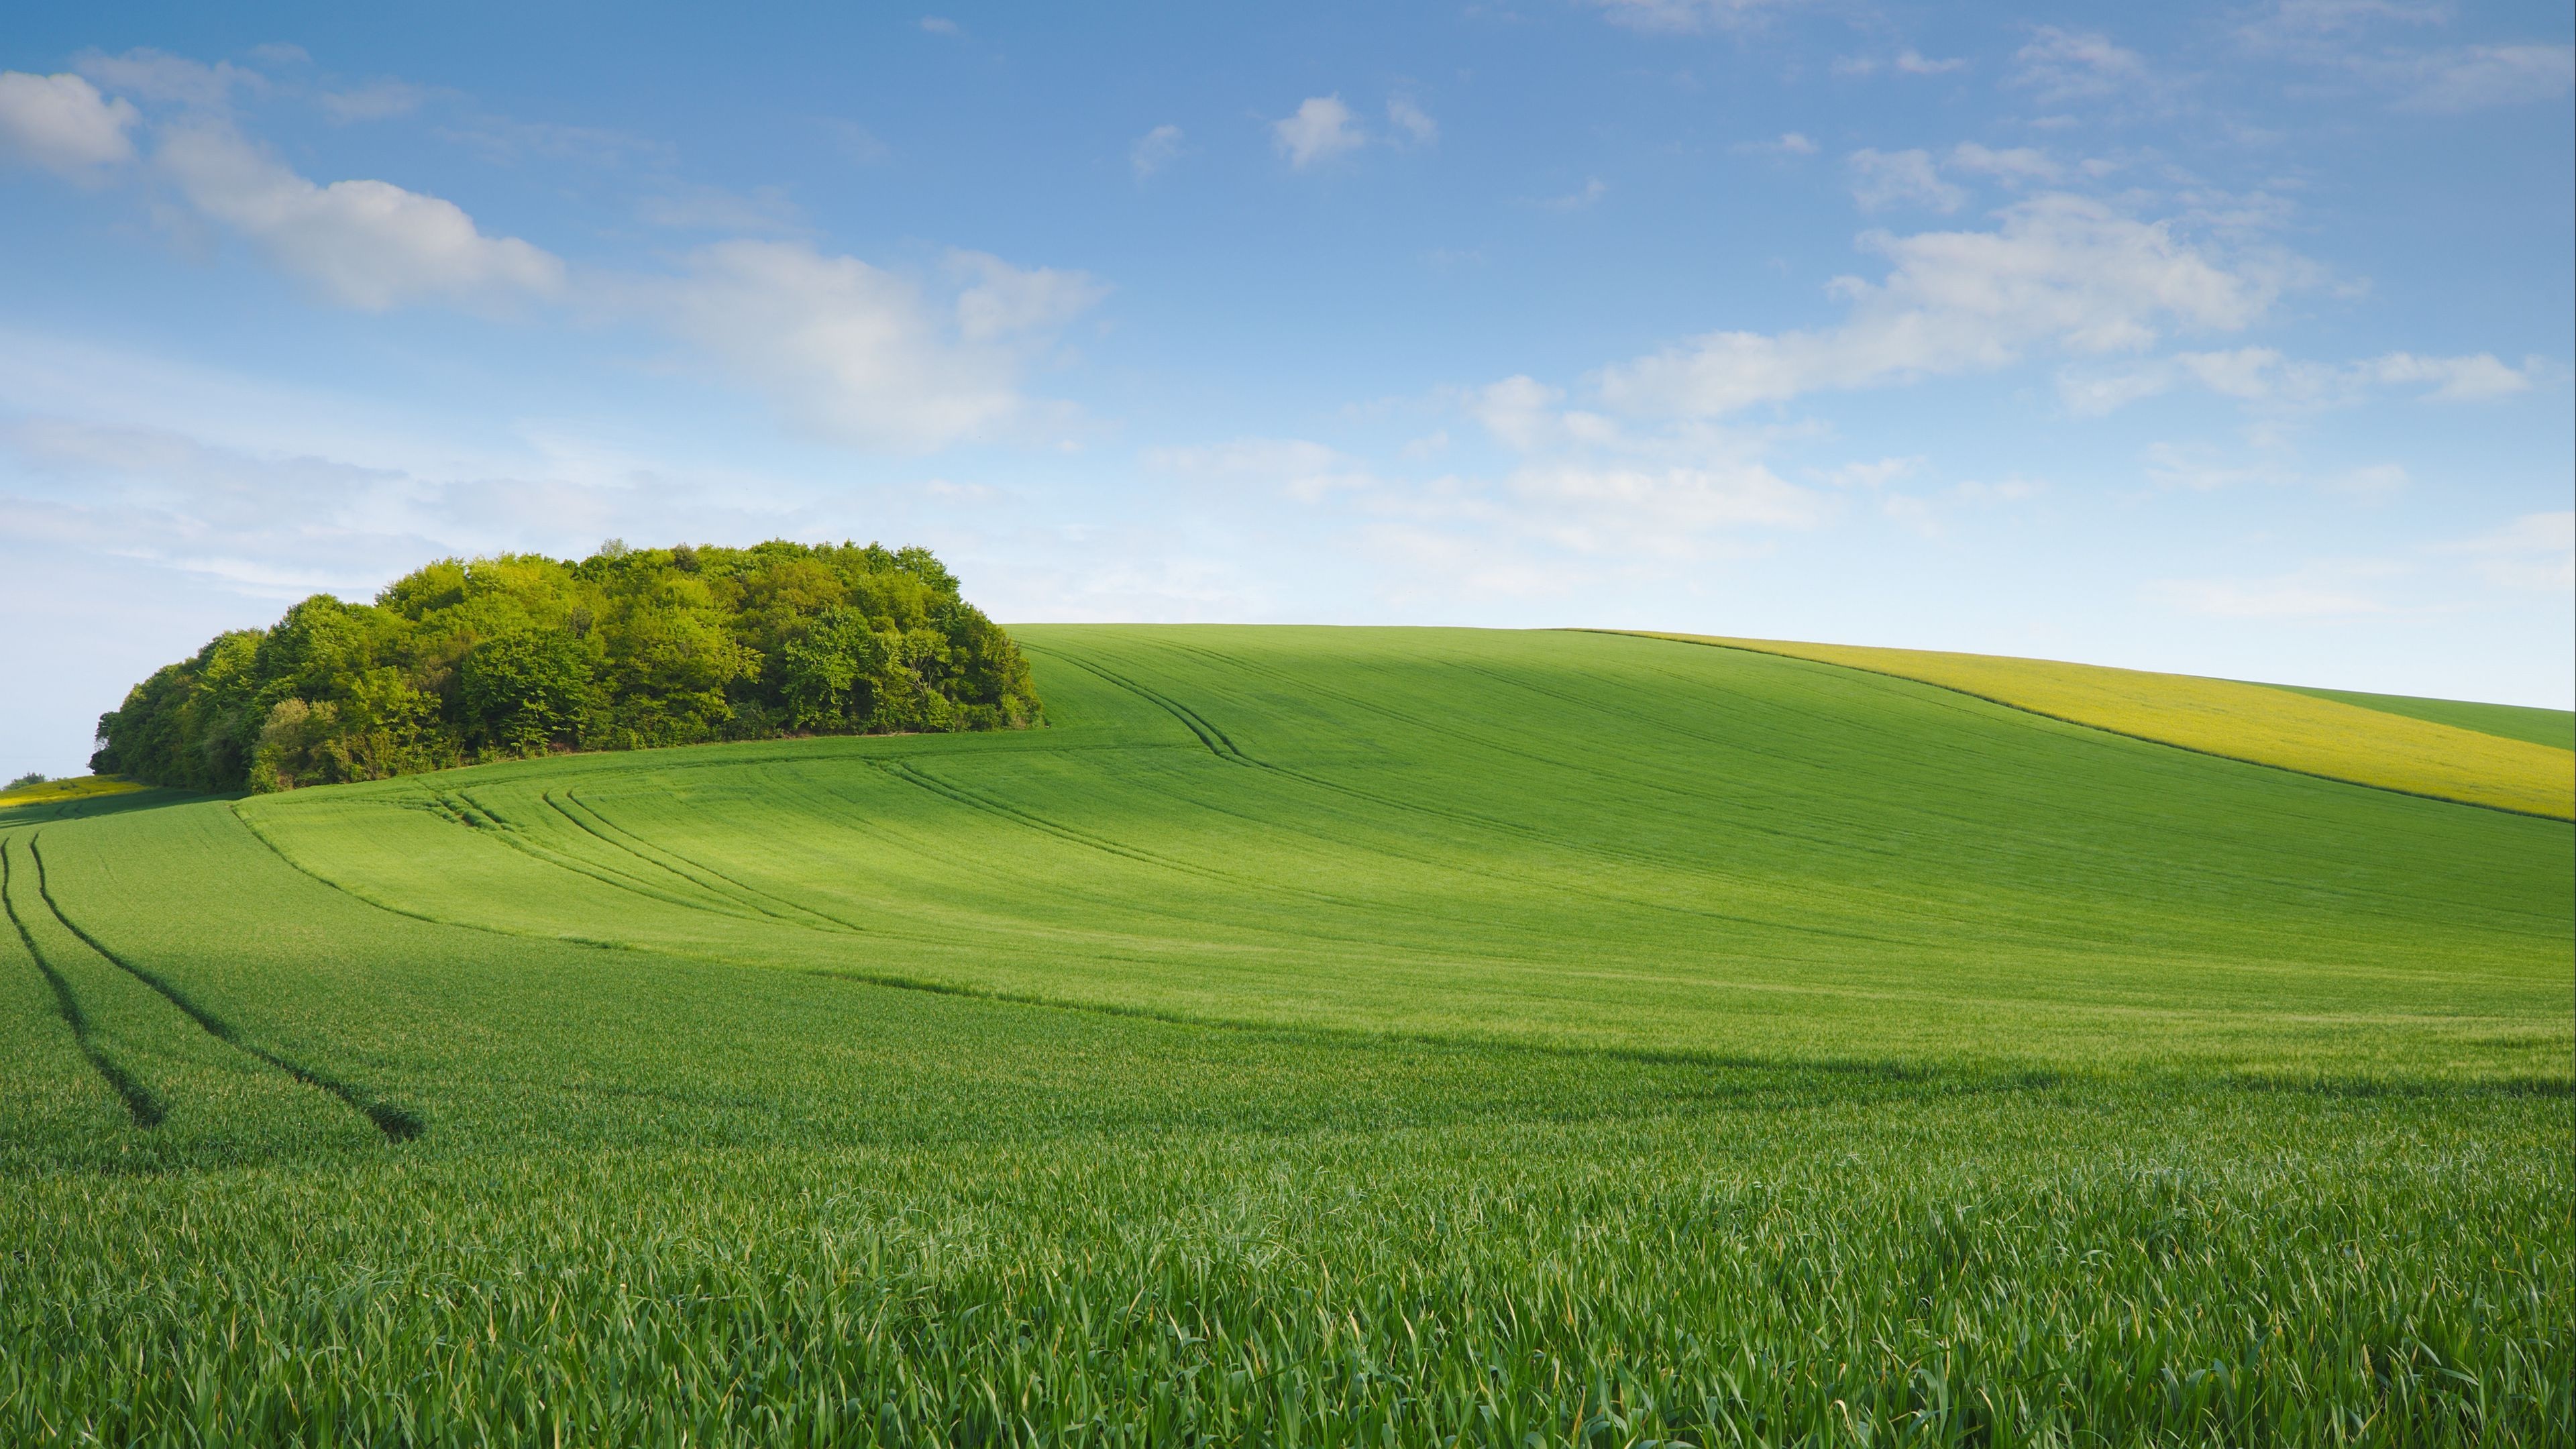 Grass and Sky: Hill, Trail, Open area, Expanse, Farmland, Field, Province, Blue sky. 3840x2160 4K Wallpaper.